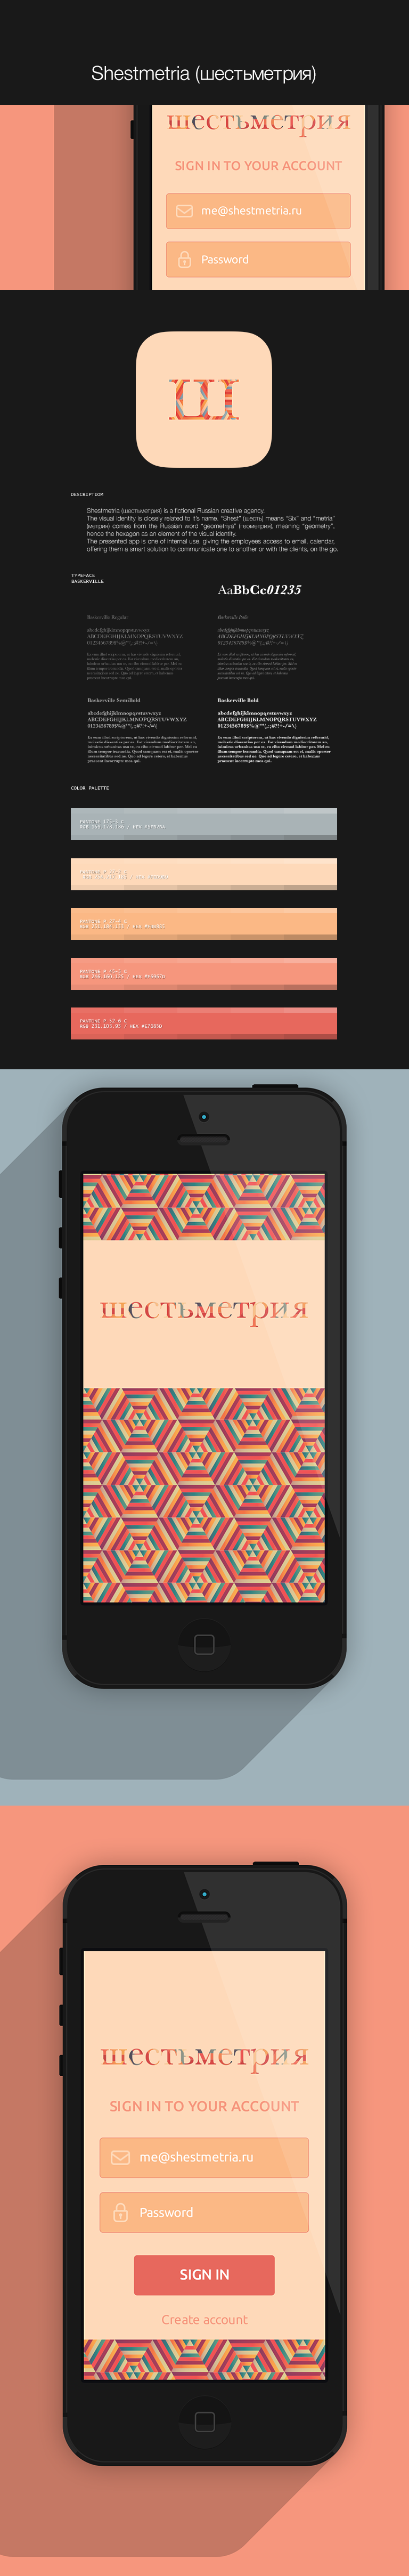 ios design app UI ux colorful minimalist flat